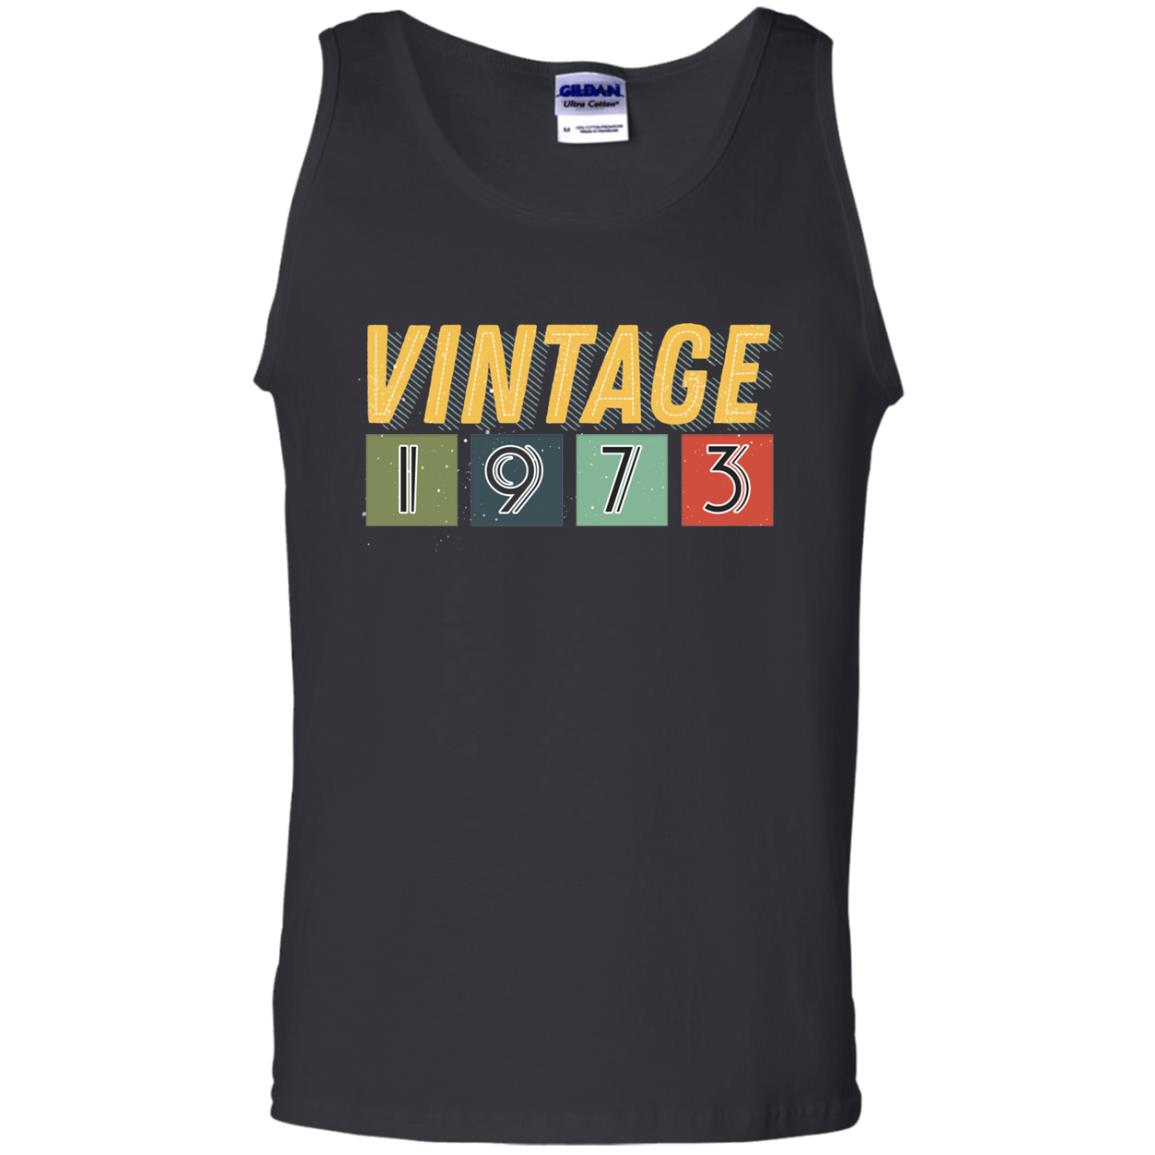 Vintage 1973 45th Birthday Gift Shirt For Mens Or WomensG220 Gildan 100% Cotton Tank Top